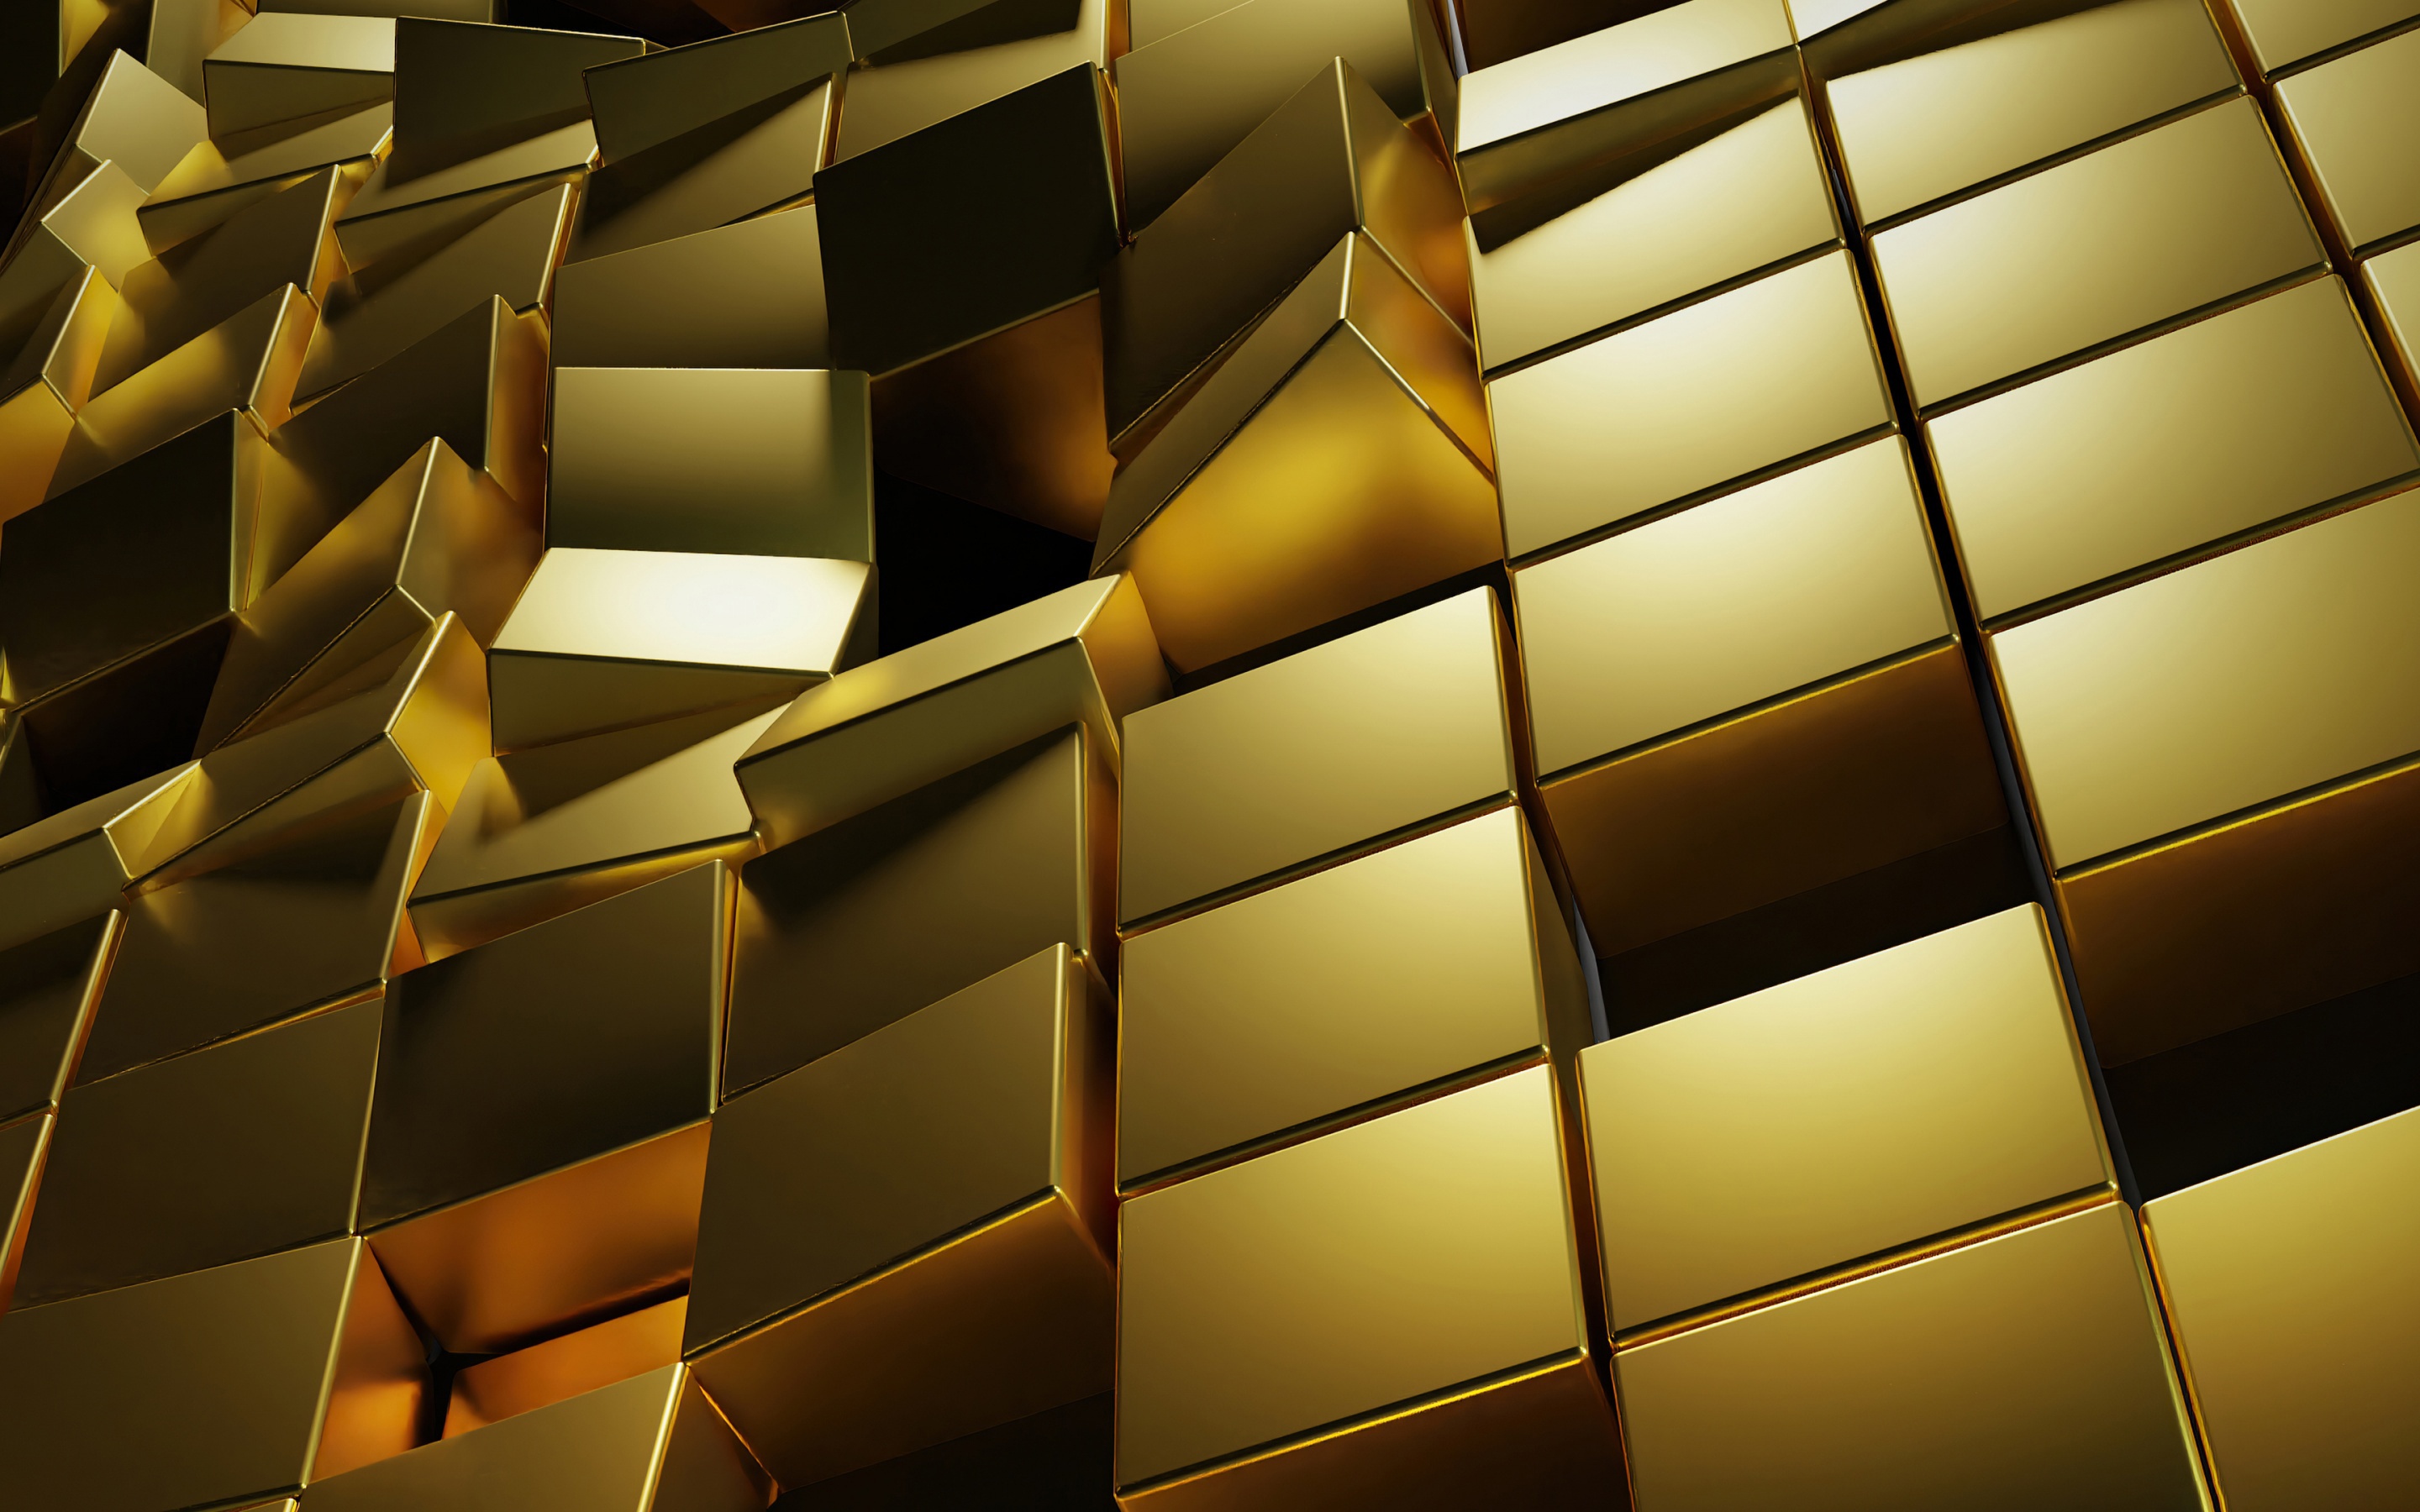 Download wallpaper gold 3D blocks, 3D gold cubes texture, gold cubes, gold 3D background, 3D gold bars for desktop with resolution 2880x1800. High Quality HD picture wallpaper